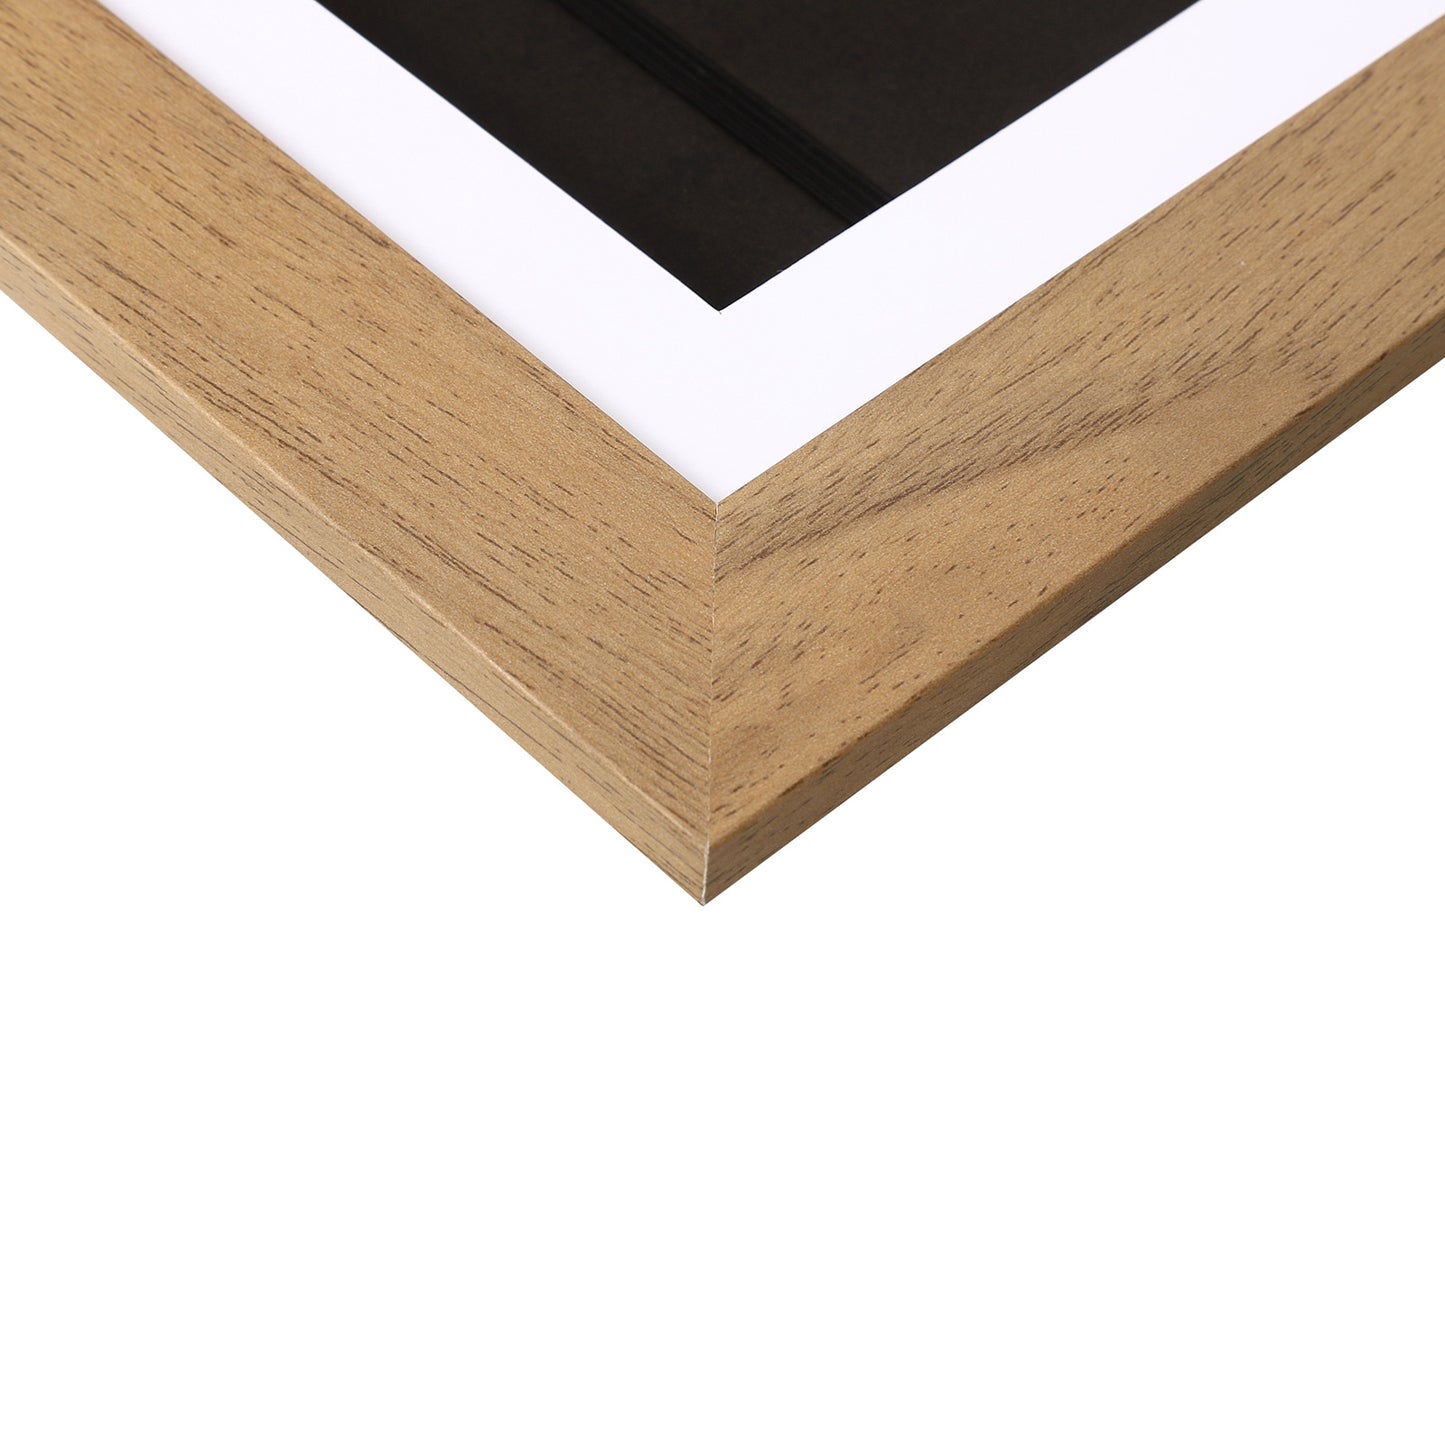 10" x 12.5" Light Oak MDF Wood Kids Art Picture Frame with Elastic Straps